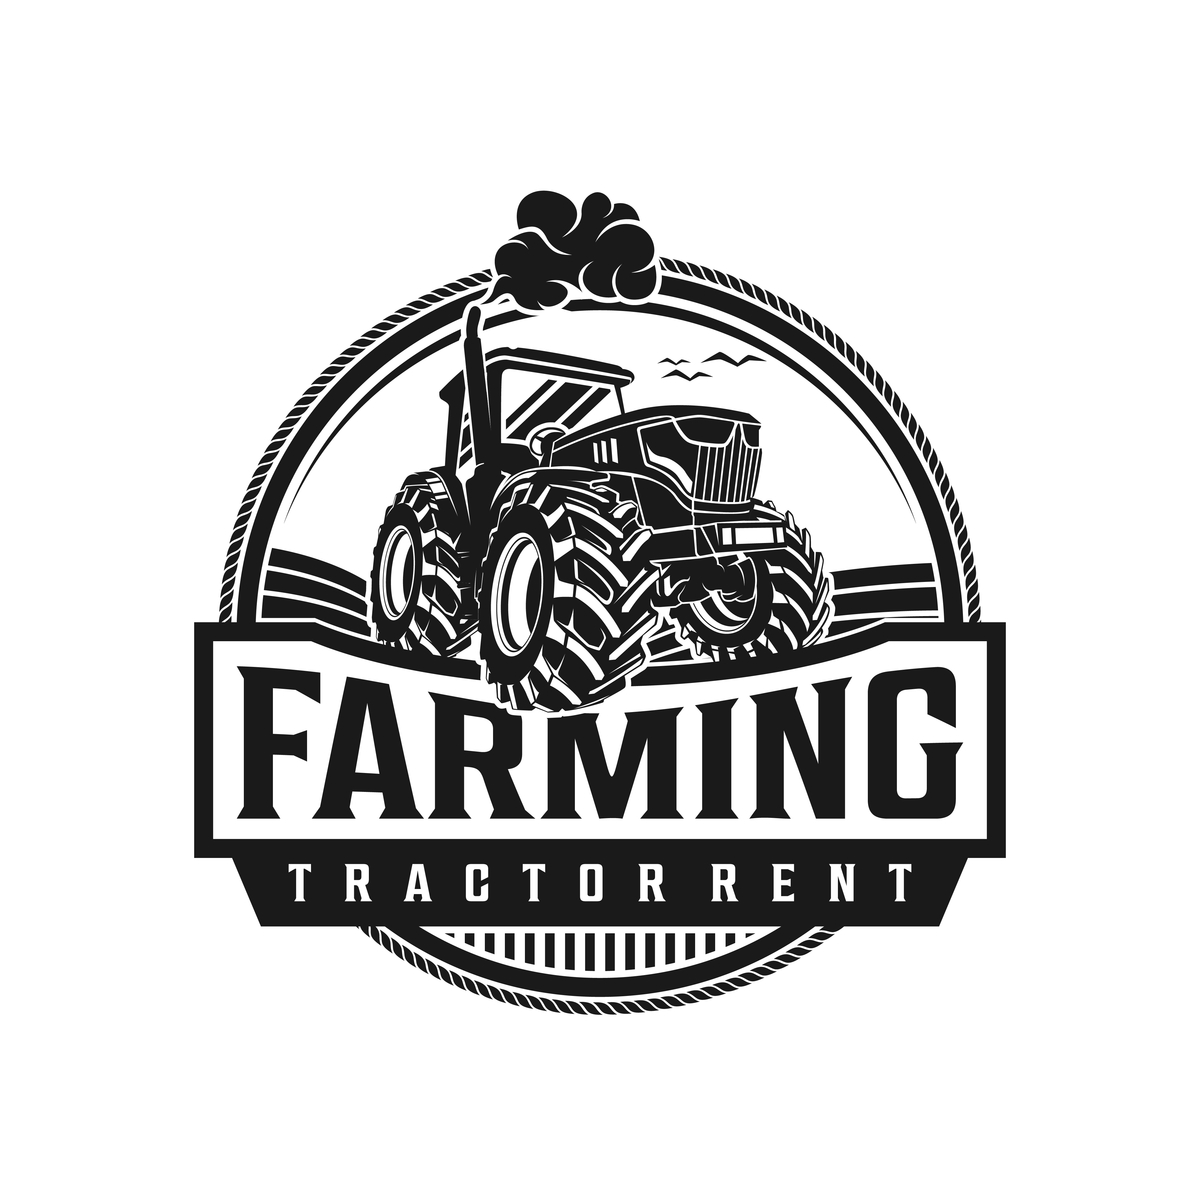 Farming tractor rent vintage logo simple minimalist by Suradiman on ...